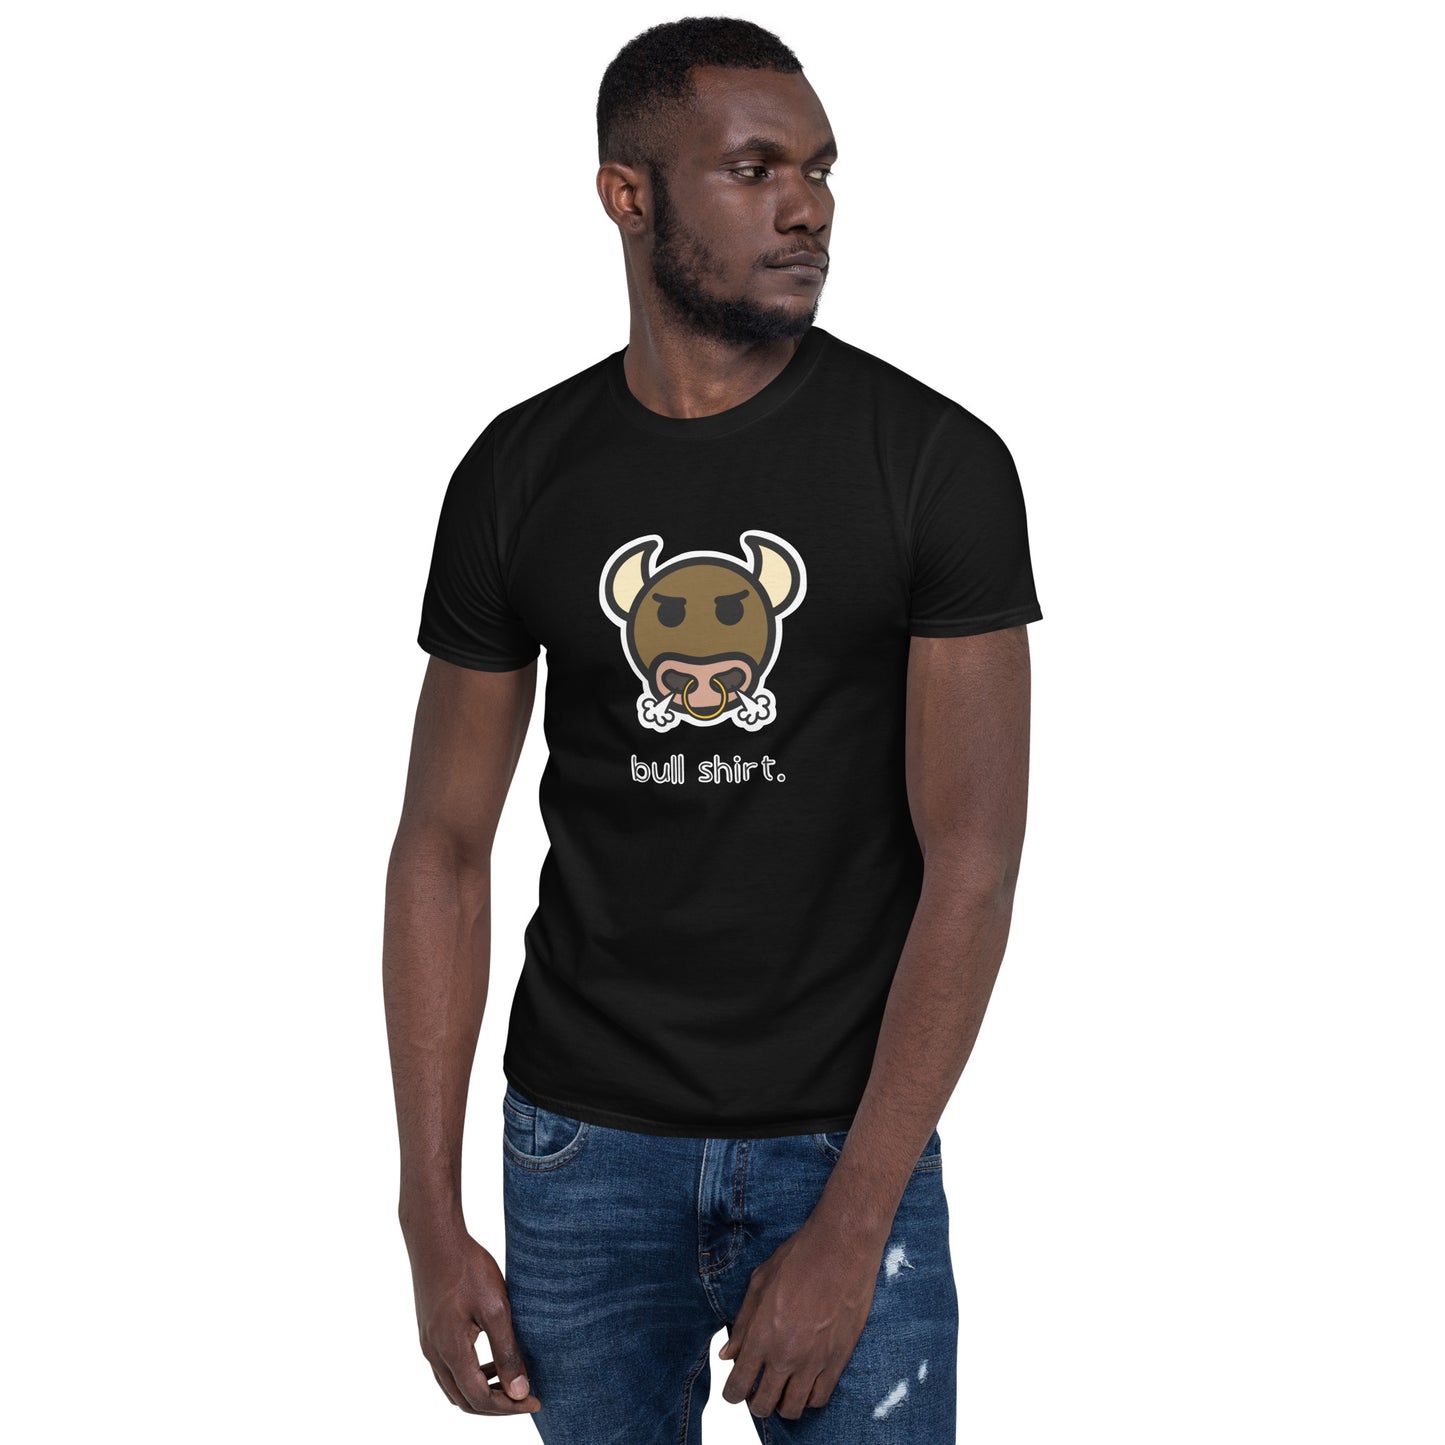 “Bull Shirt” Short-Sleeve Unisex T-Shirt